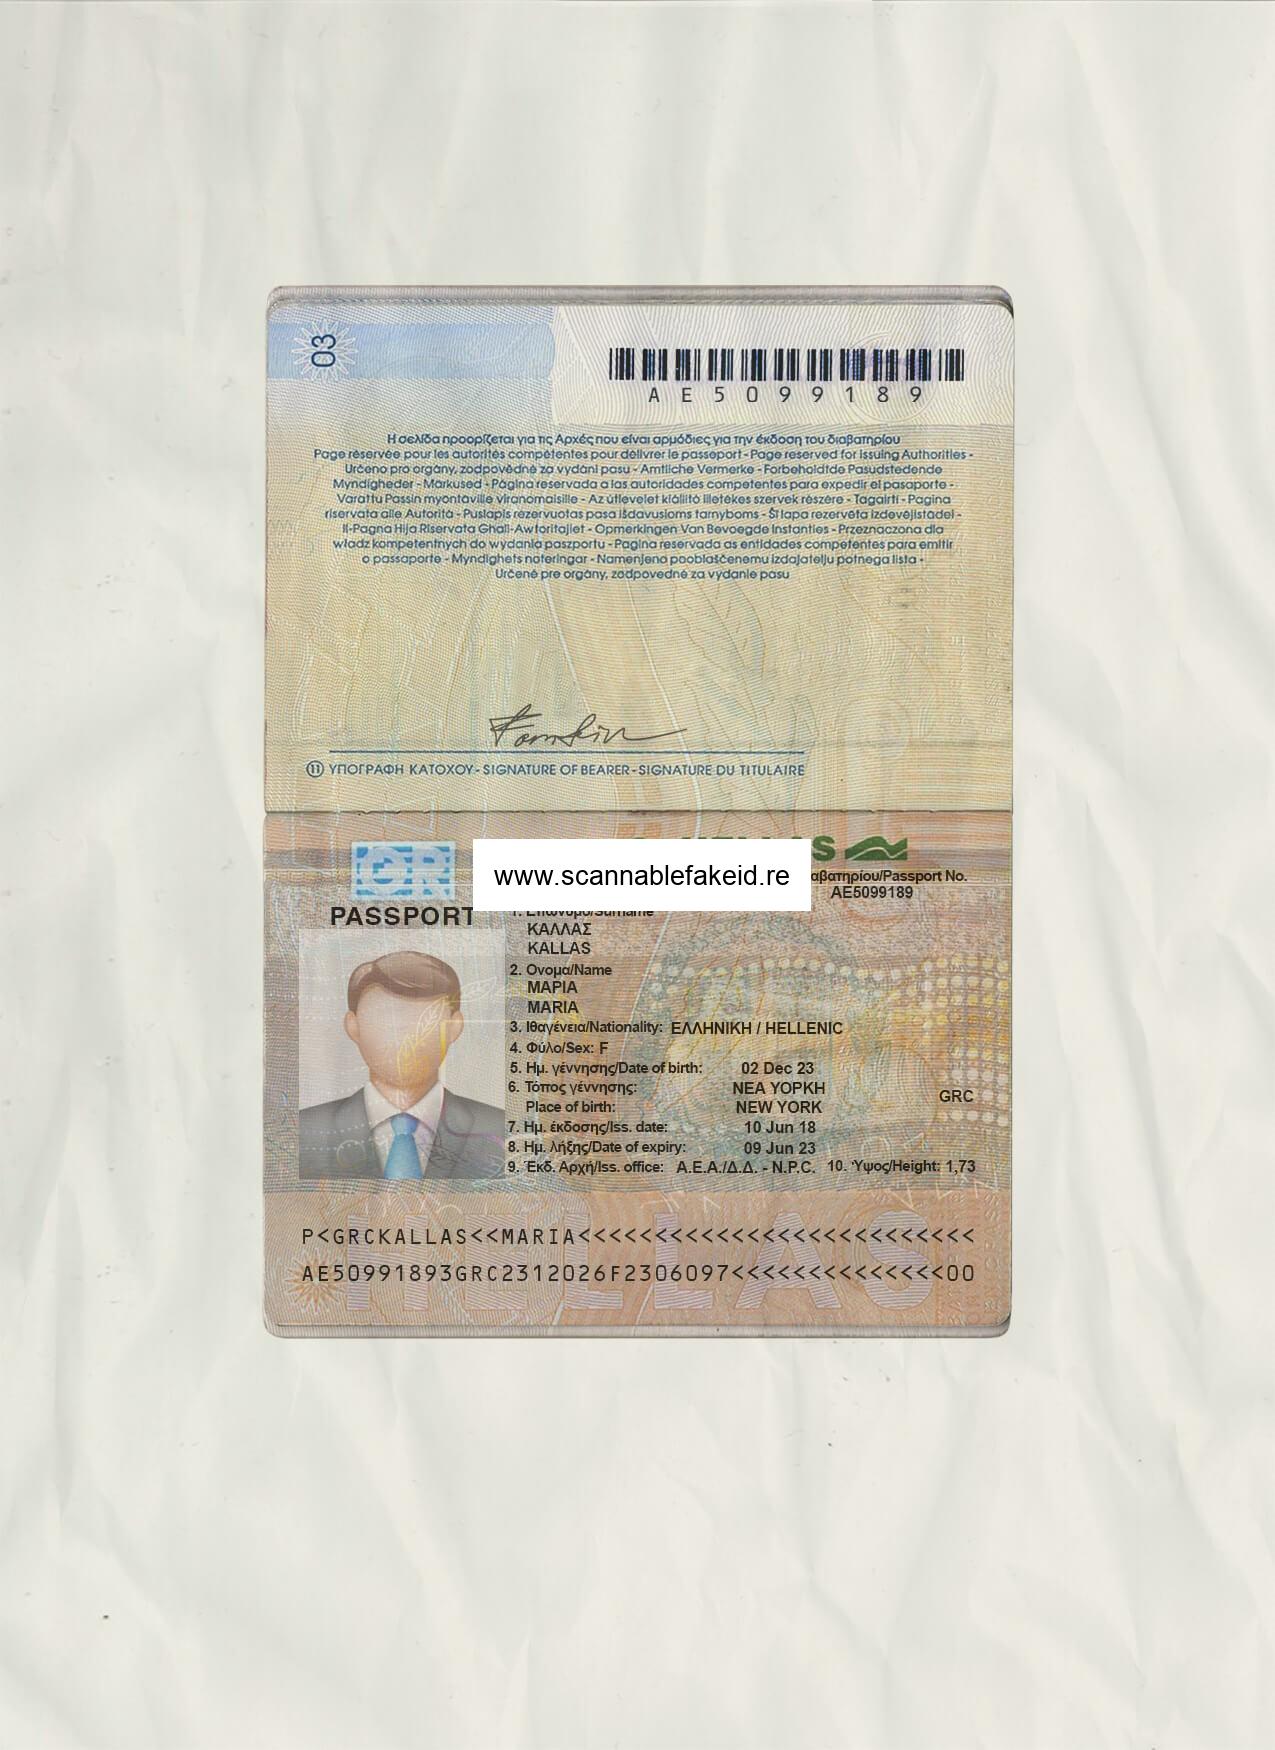 Greece Fake Passport - Buy Scannable Fake Id Online - Fake ID Website